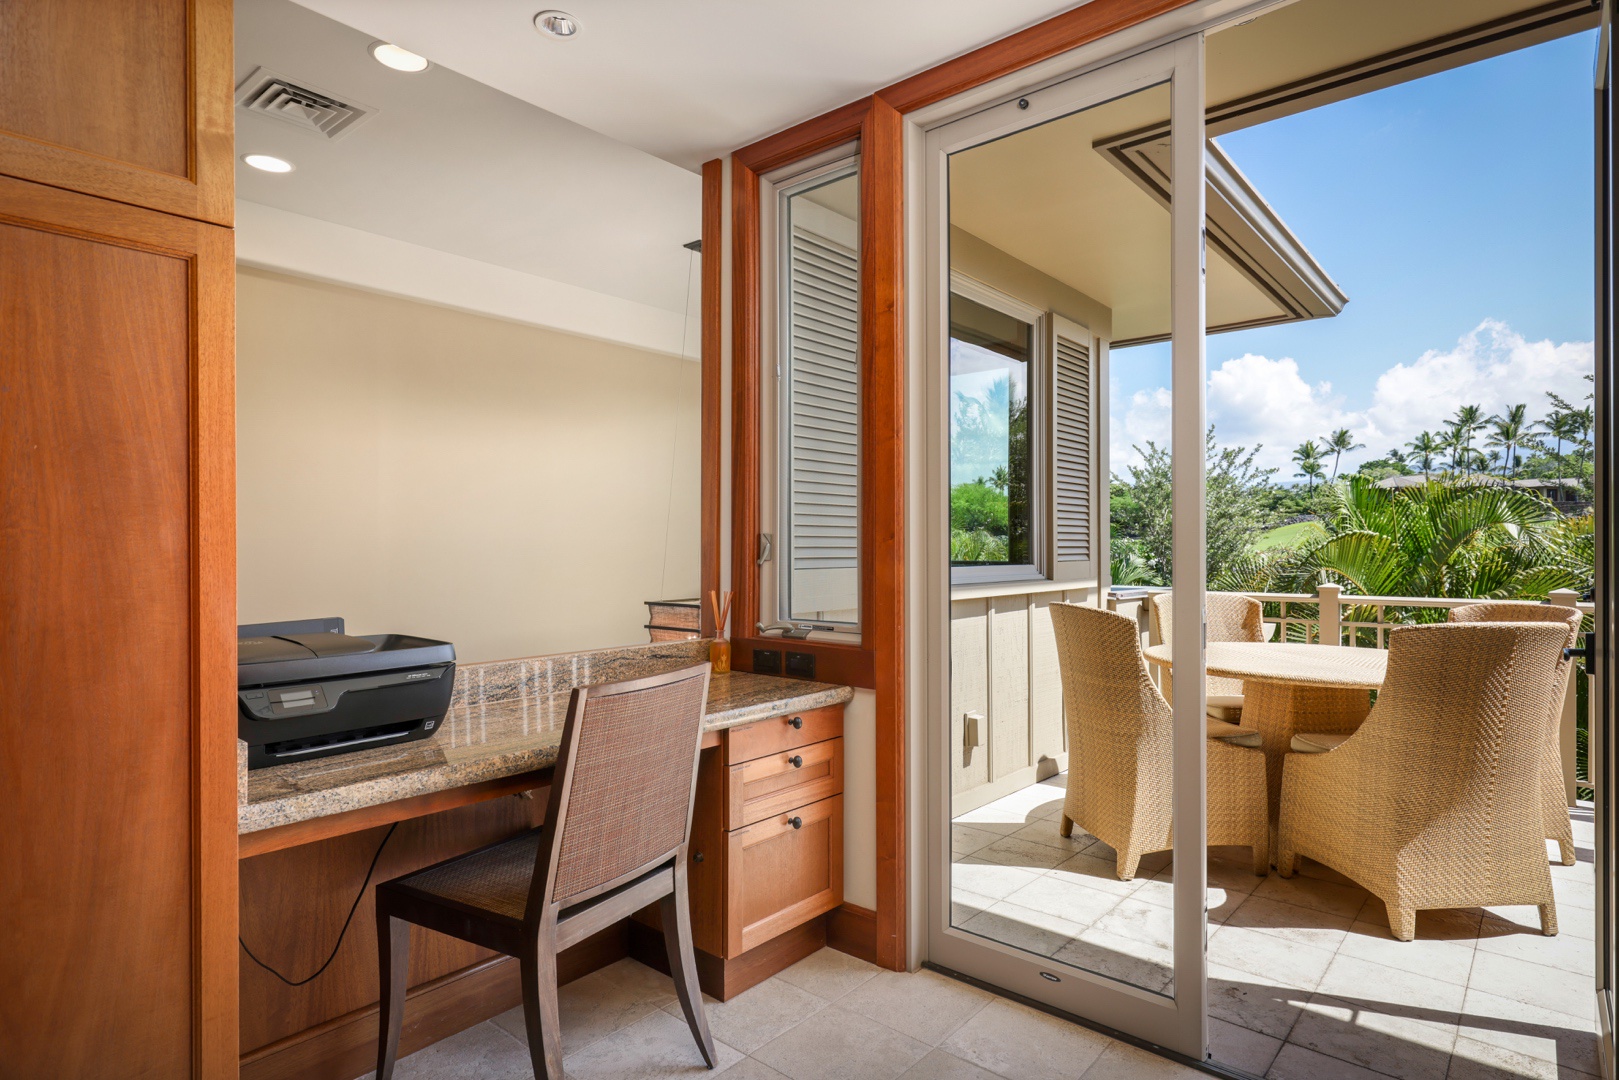 Kailua Kona Vacation Rentals, 3BD Ke Alaula Villa (210B) at Four Seasons Resort at Hualalai - Built-in desk and a lovely breakfast balcony overlooking the immaculate courtyard.